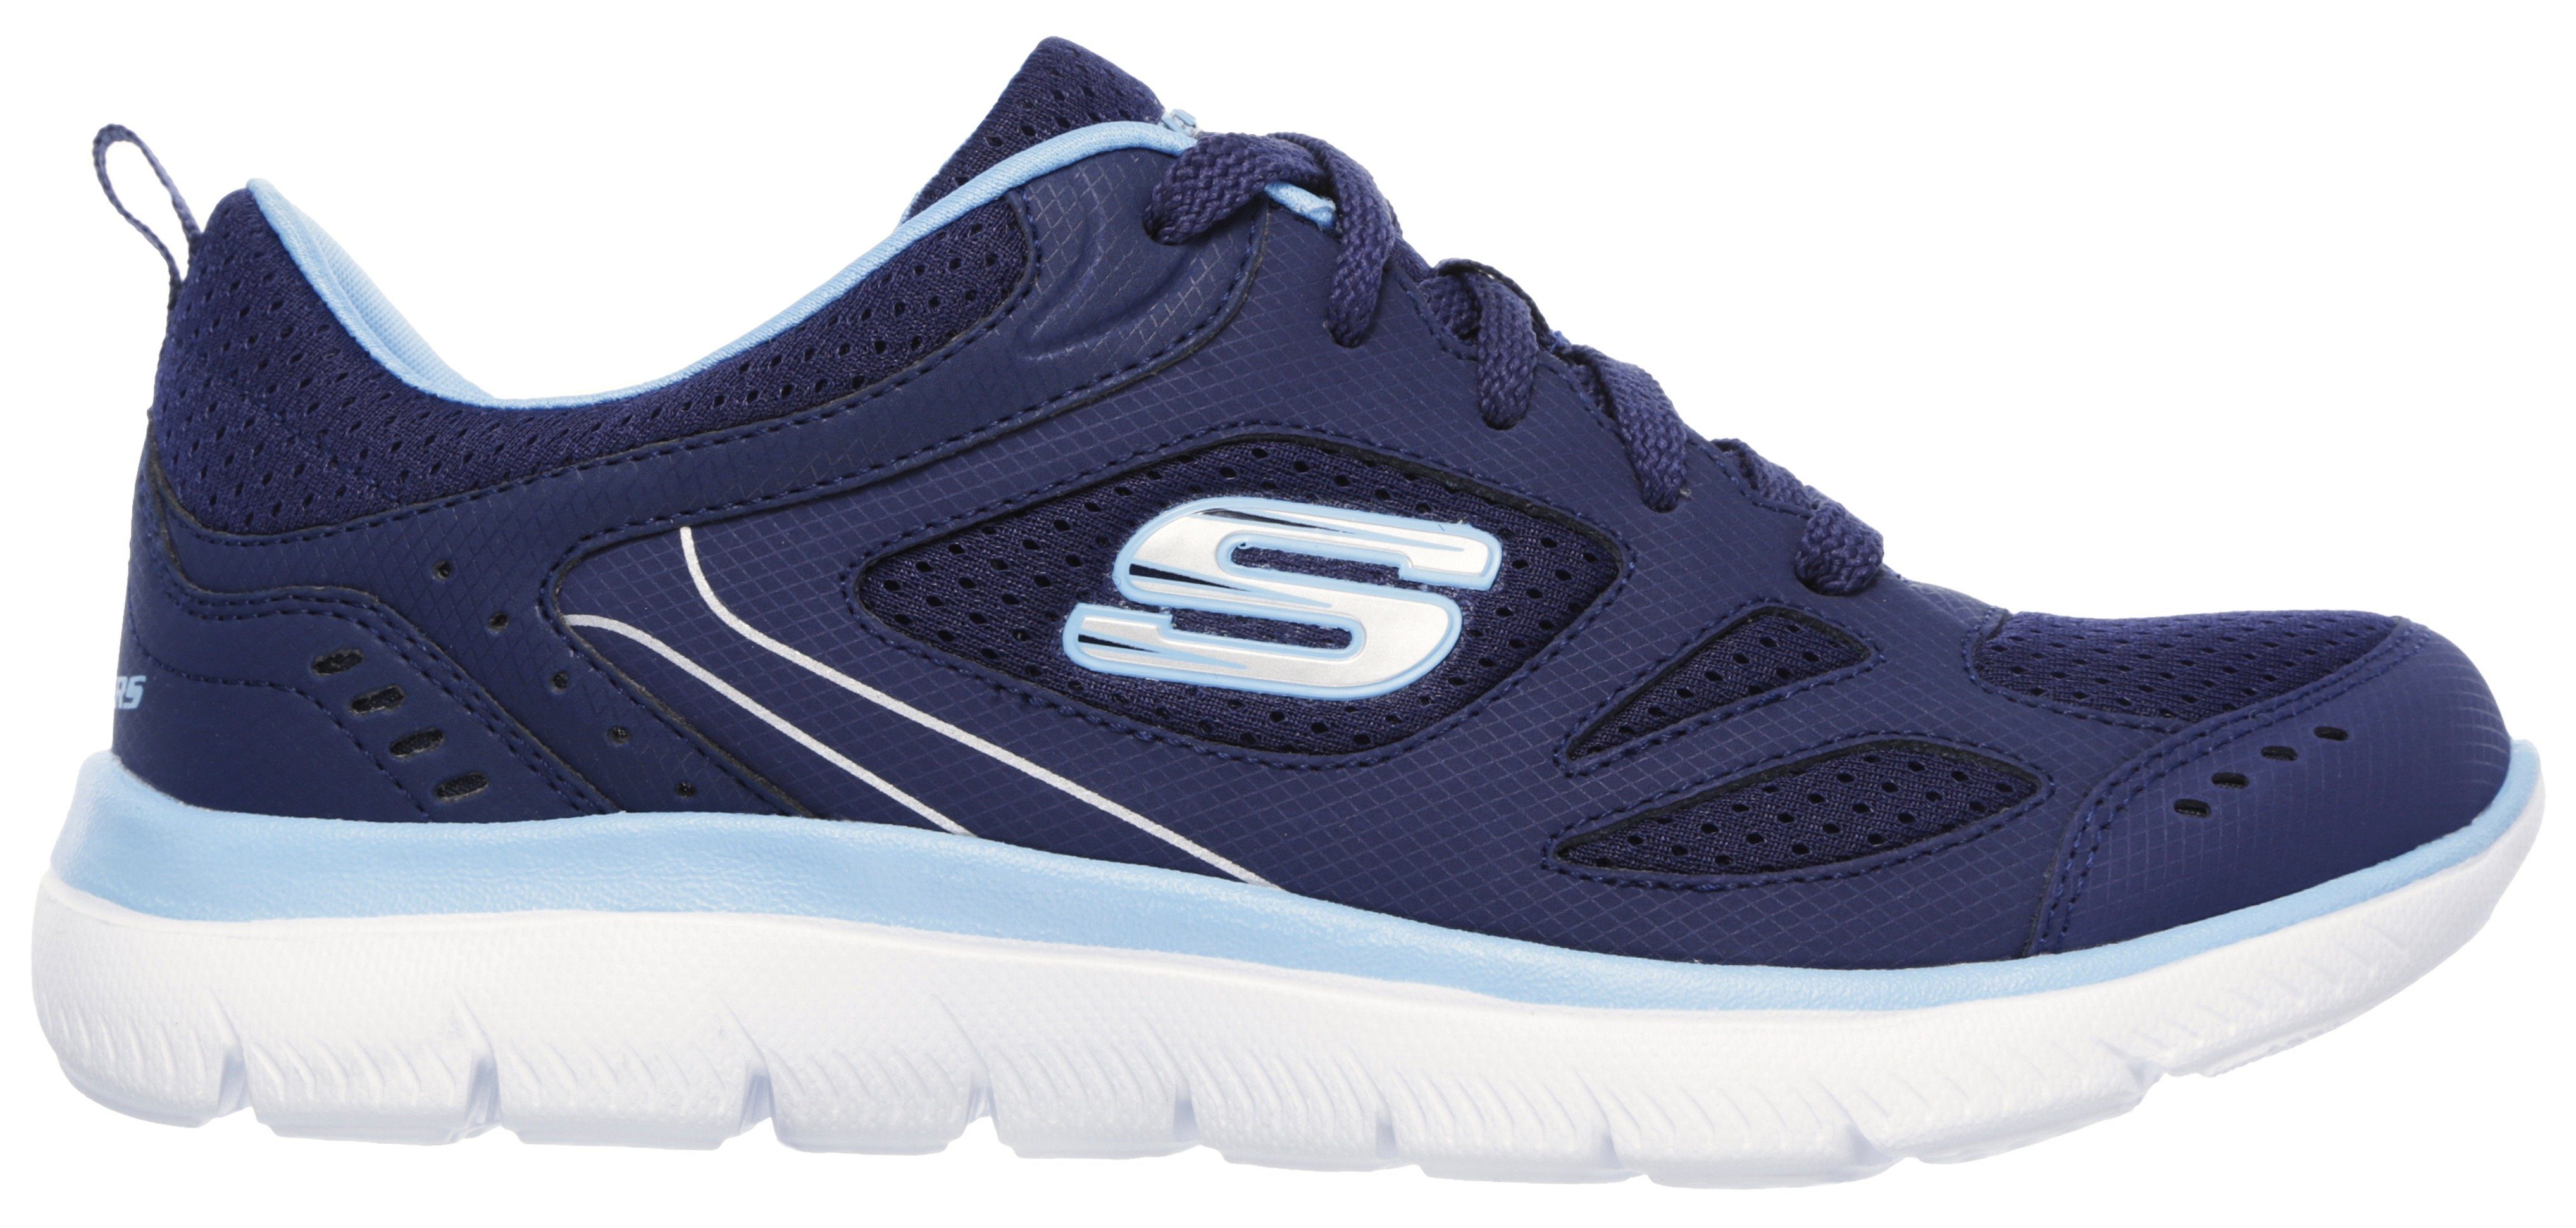 Sneaker navy-blau gepolsterter Skechers SUMMITS-SUITED mit weich Innensohle